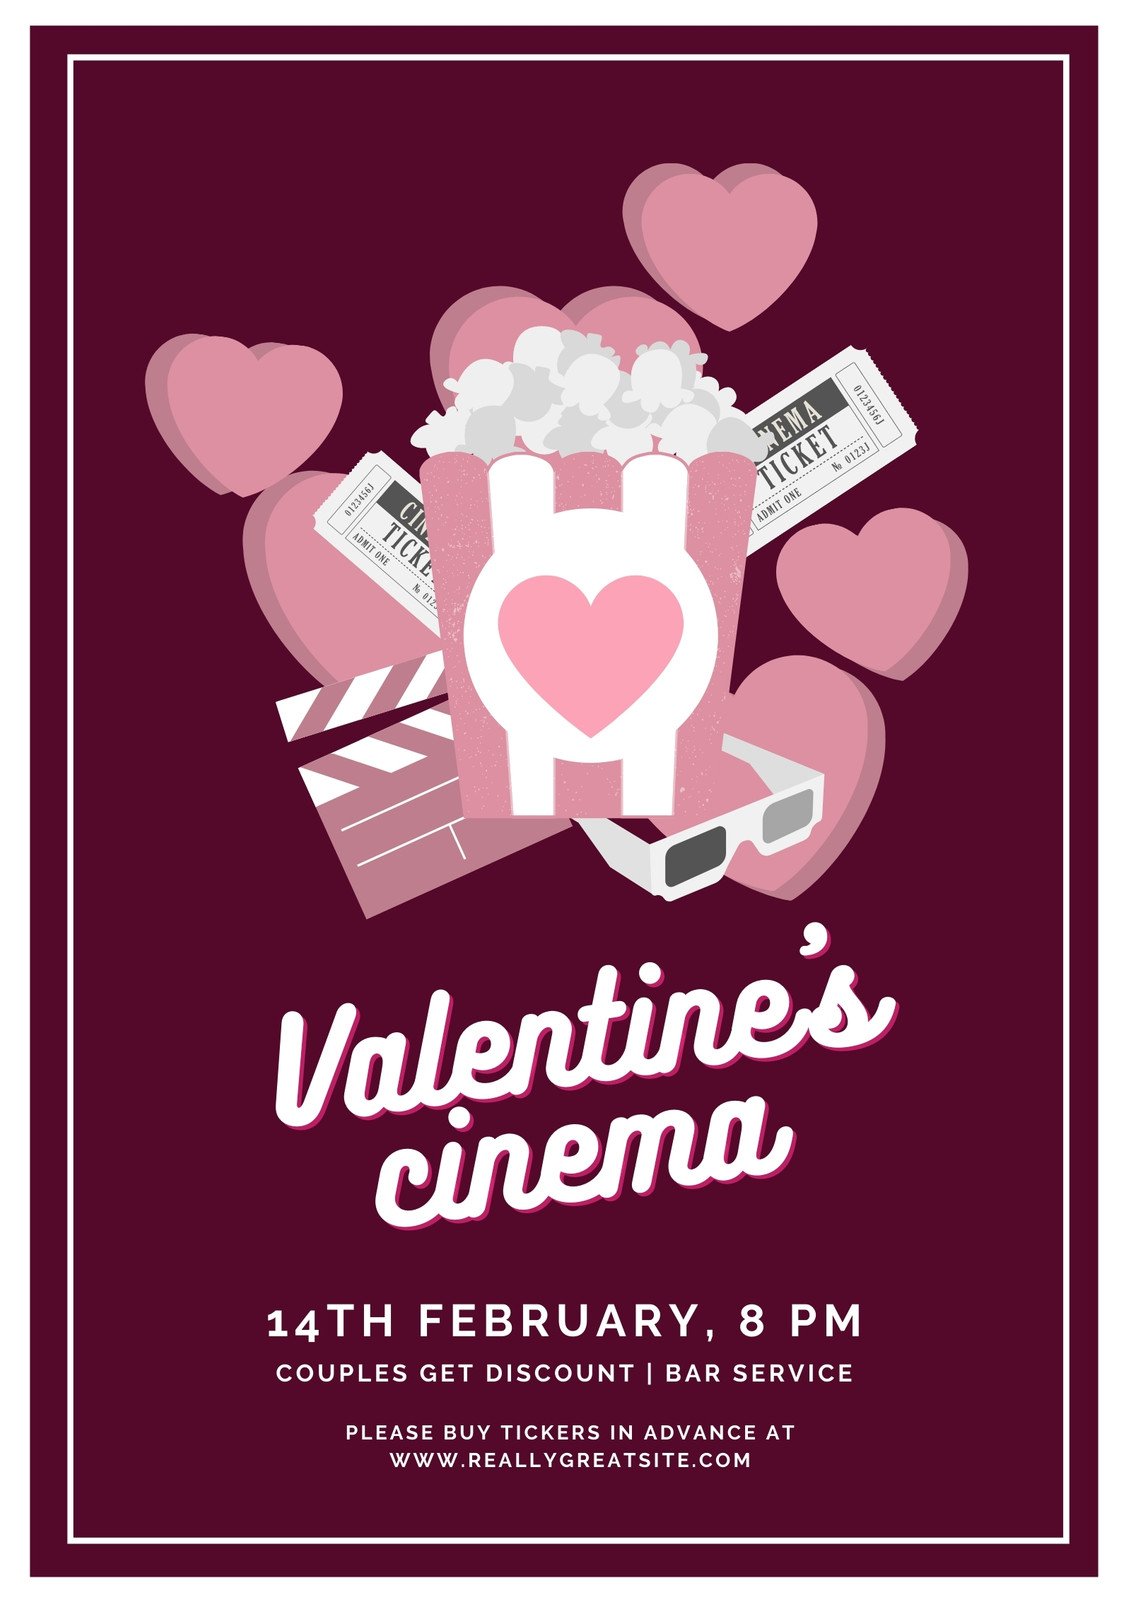 Pink Cute Minimal Valentine's Day Cinema Poster